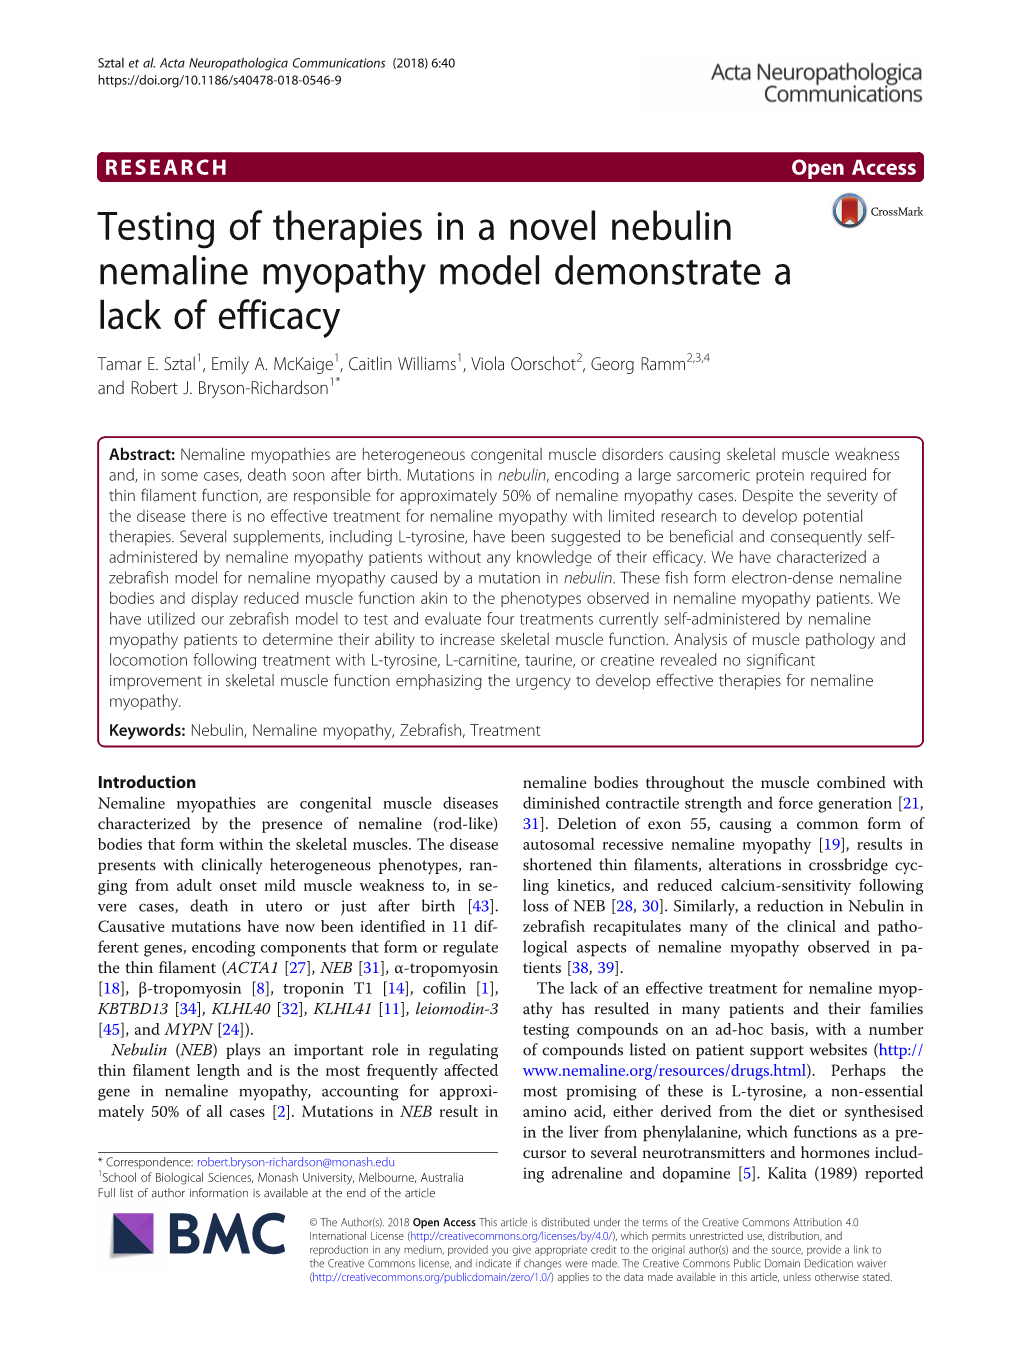 Testing of Therapies in a Novel Nebulin Nemaline Myopathy Model Demonstrate a Lack of Efficacy Tamar E